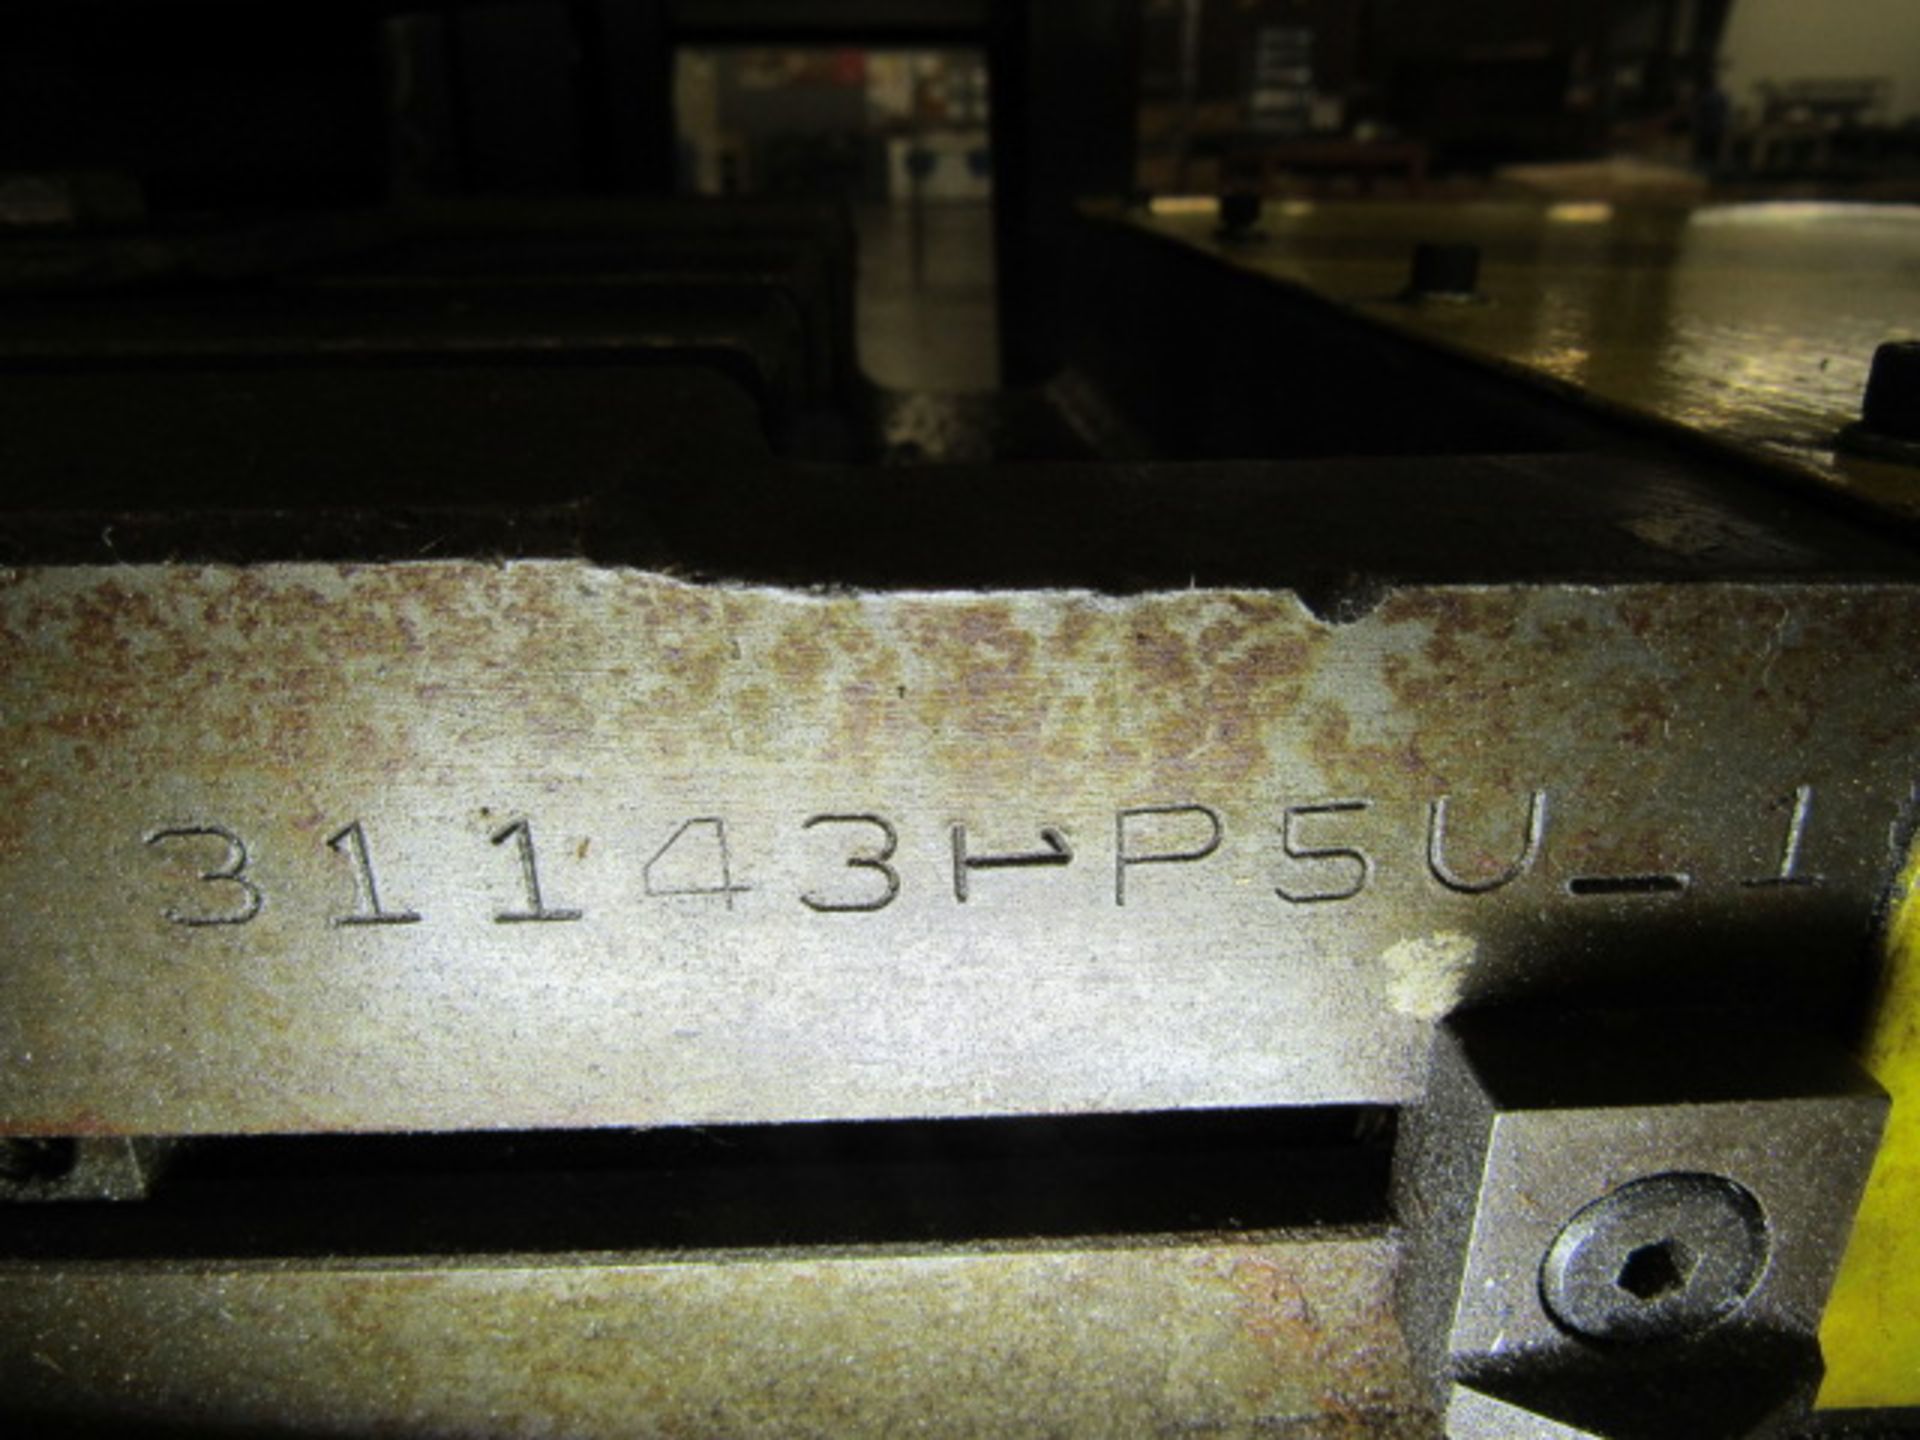 Cincinnati Hypowermatic Dynapoise Horizontal Production Milling Machine - Image 5 of 5